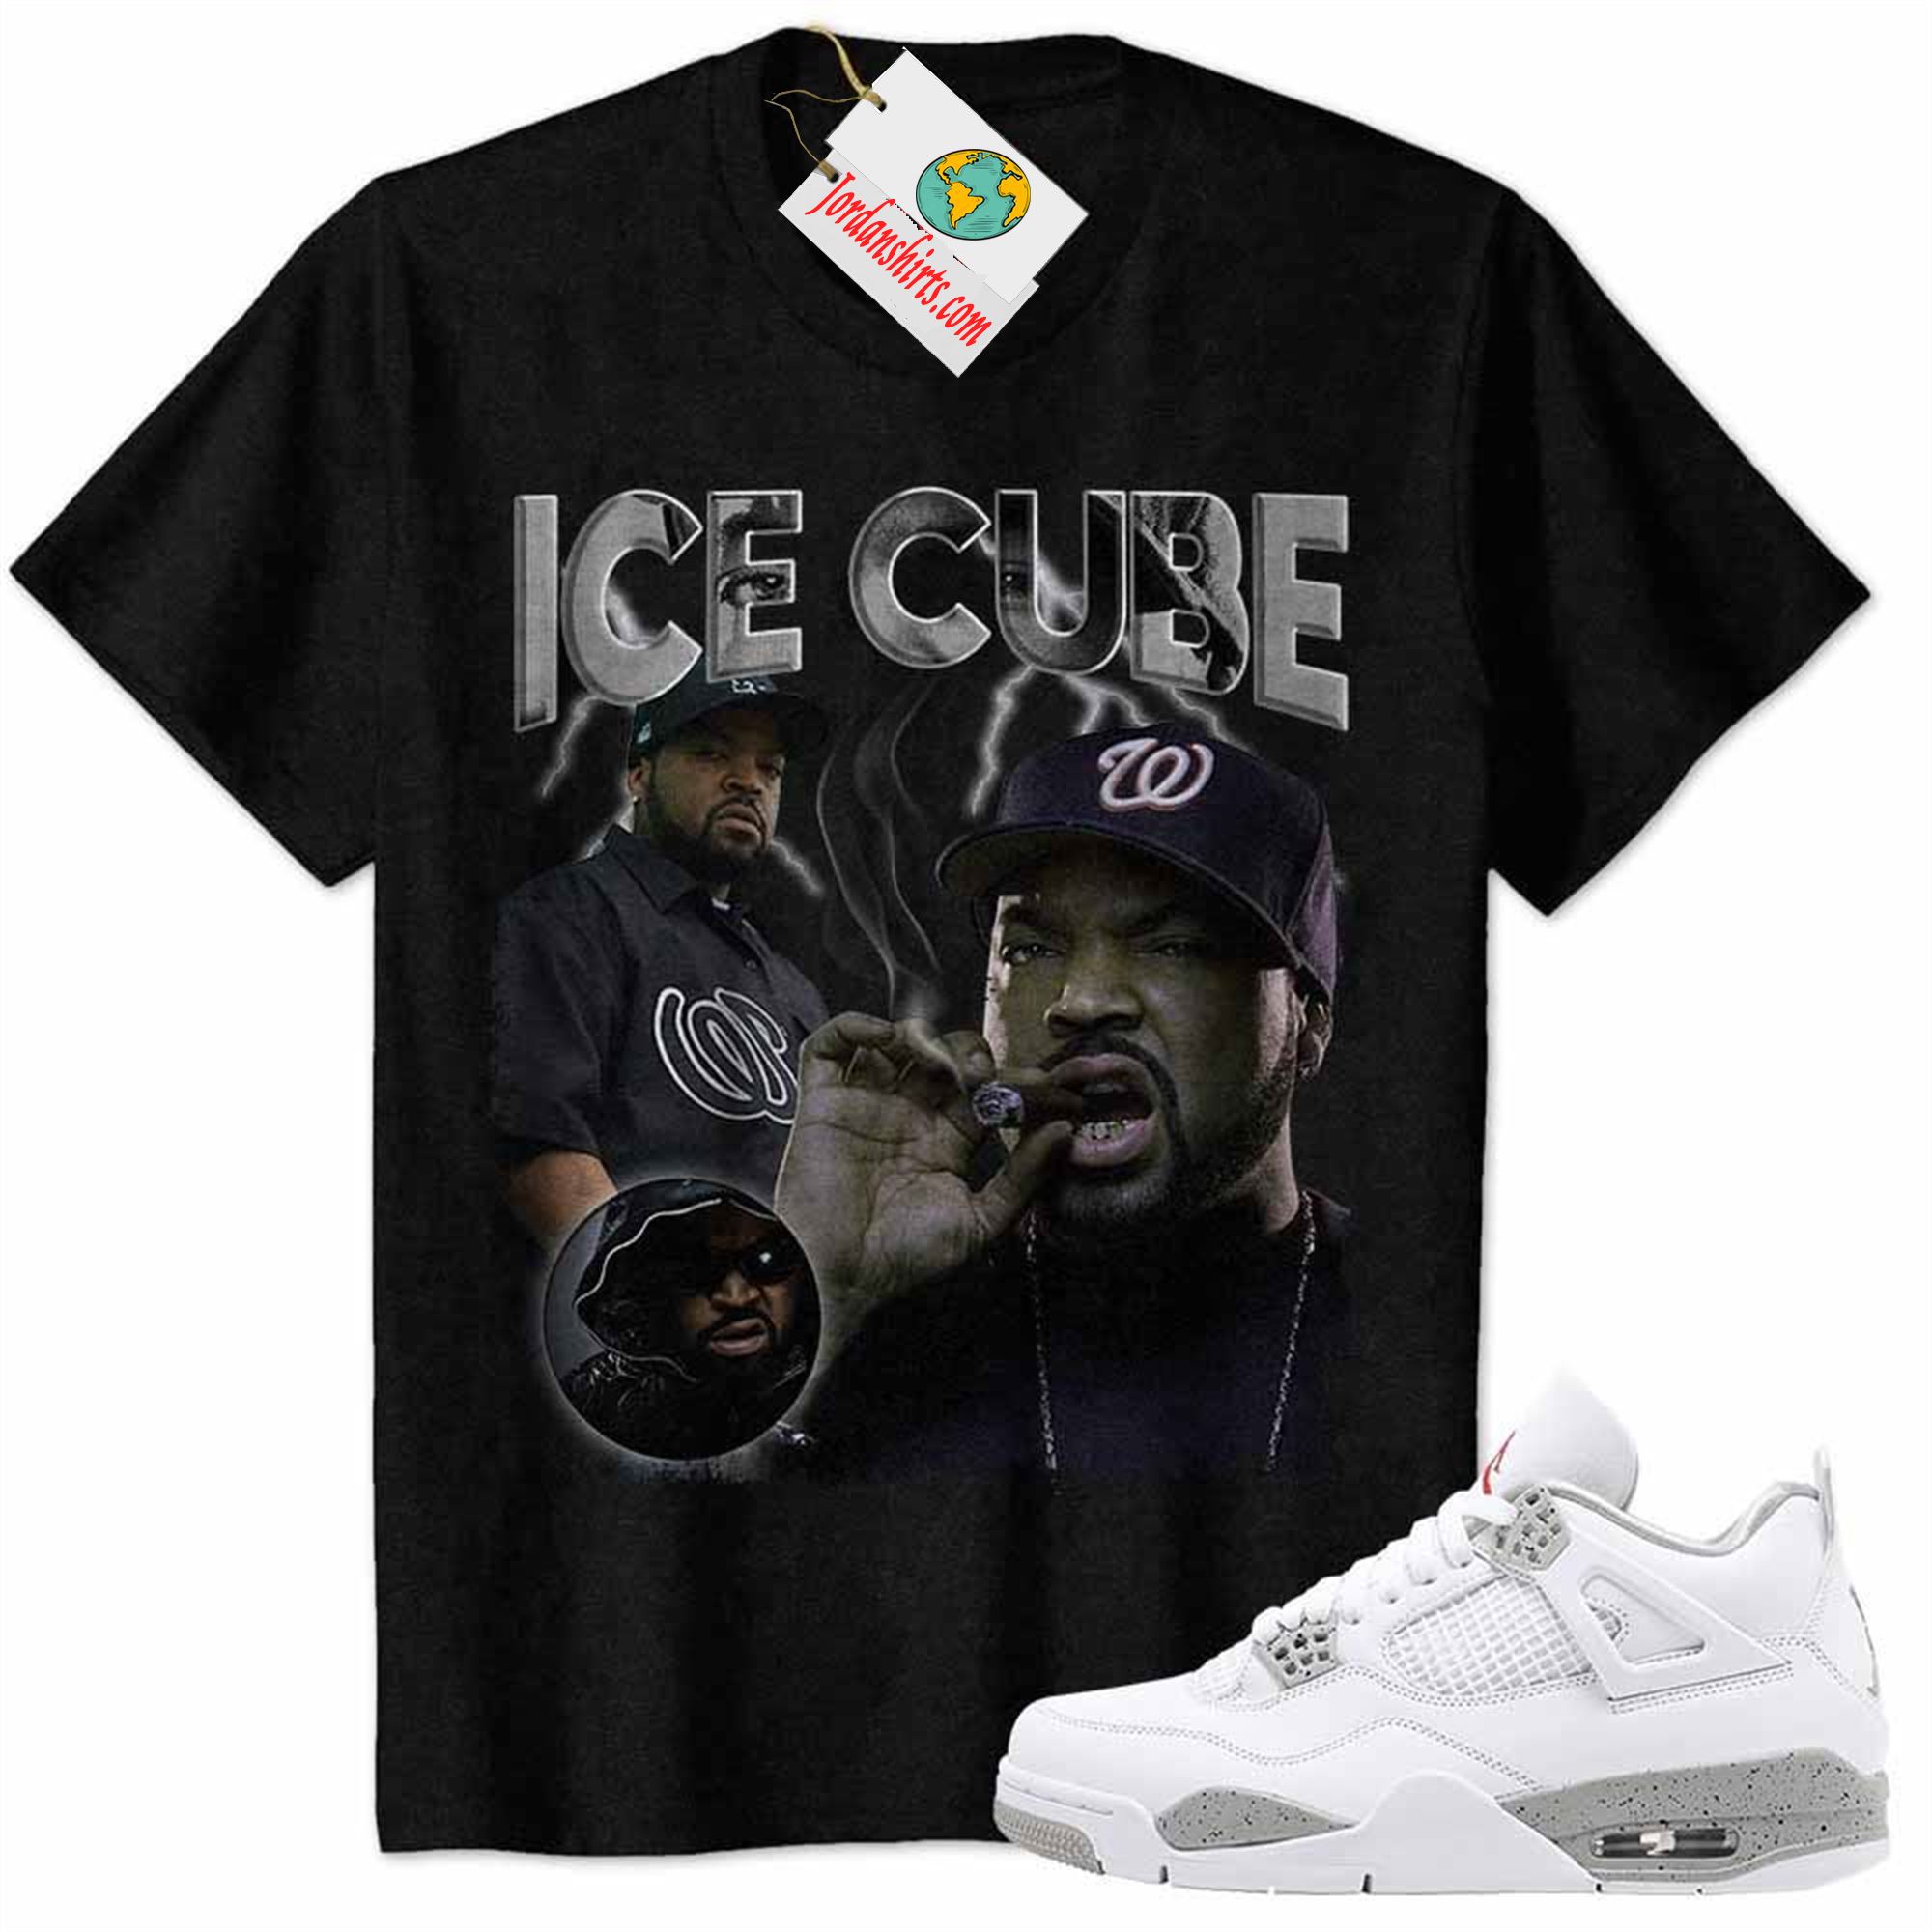 Jordan 4 Shirt, Ice Cube Black Air Jordan 4 White Oreo 4s Full Size Up To 5xl